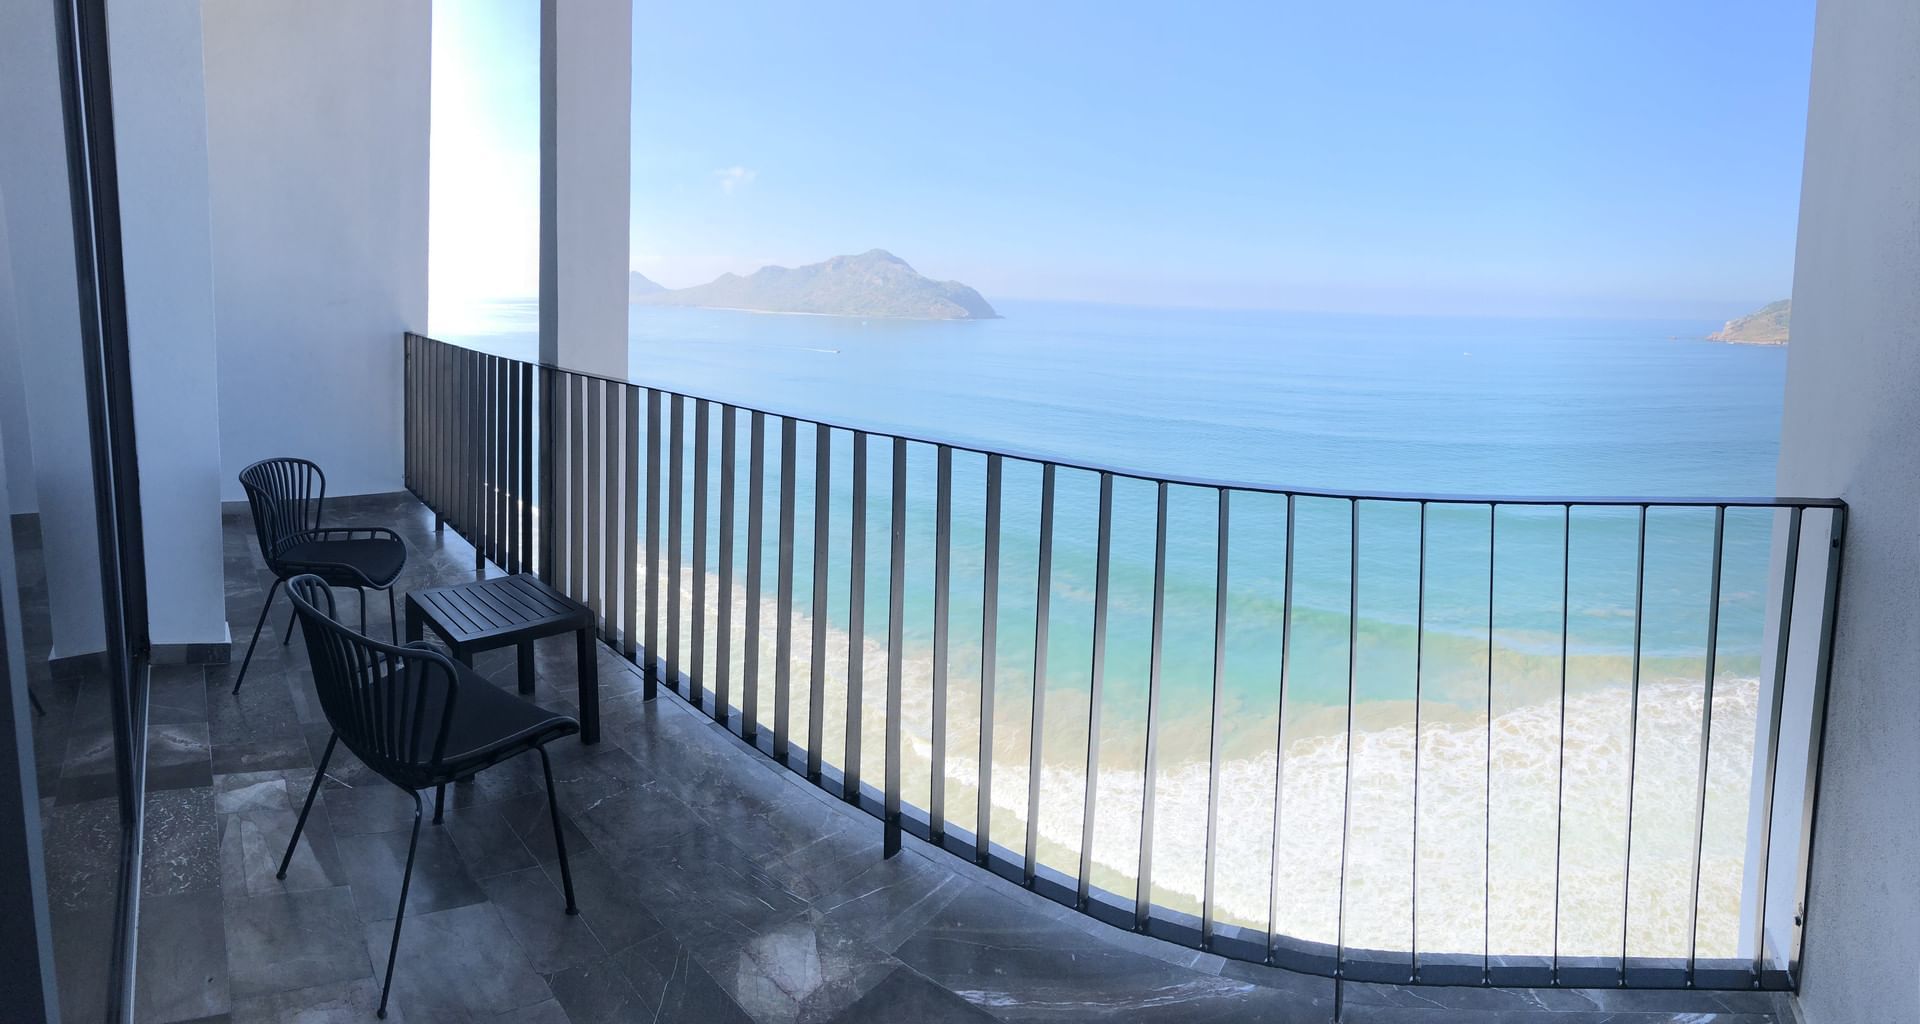 Ocean view from the balcony of a room, Viaggio Resort Mazatlan